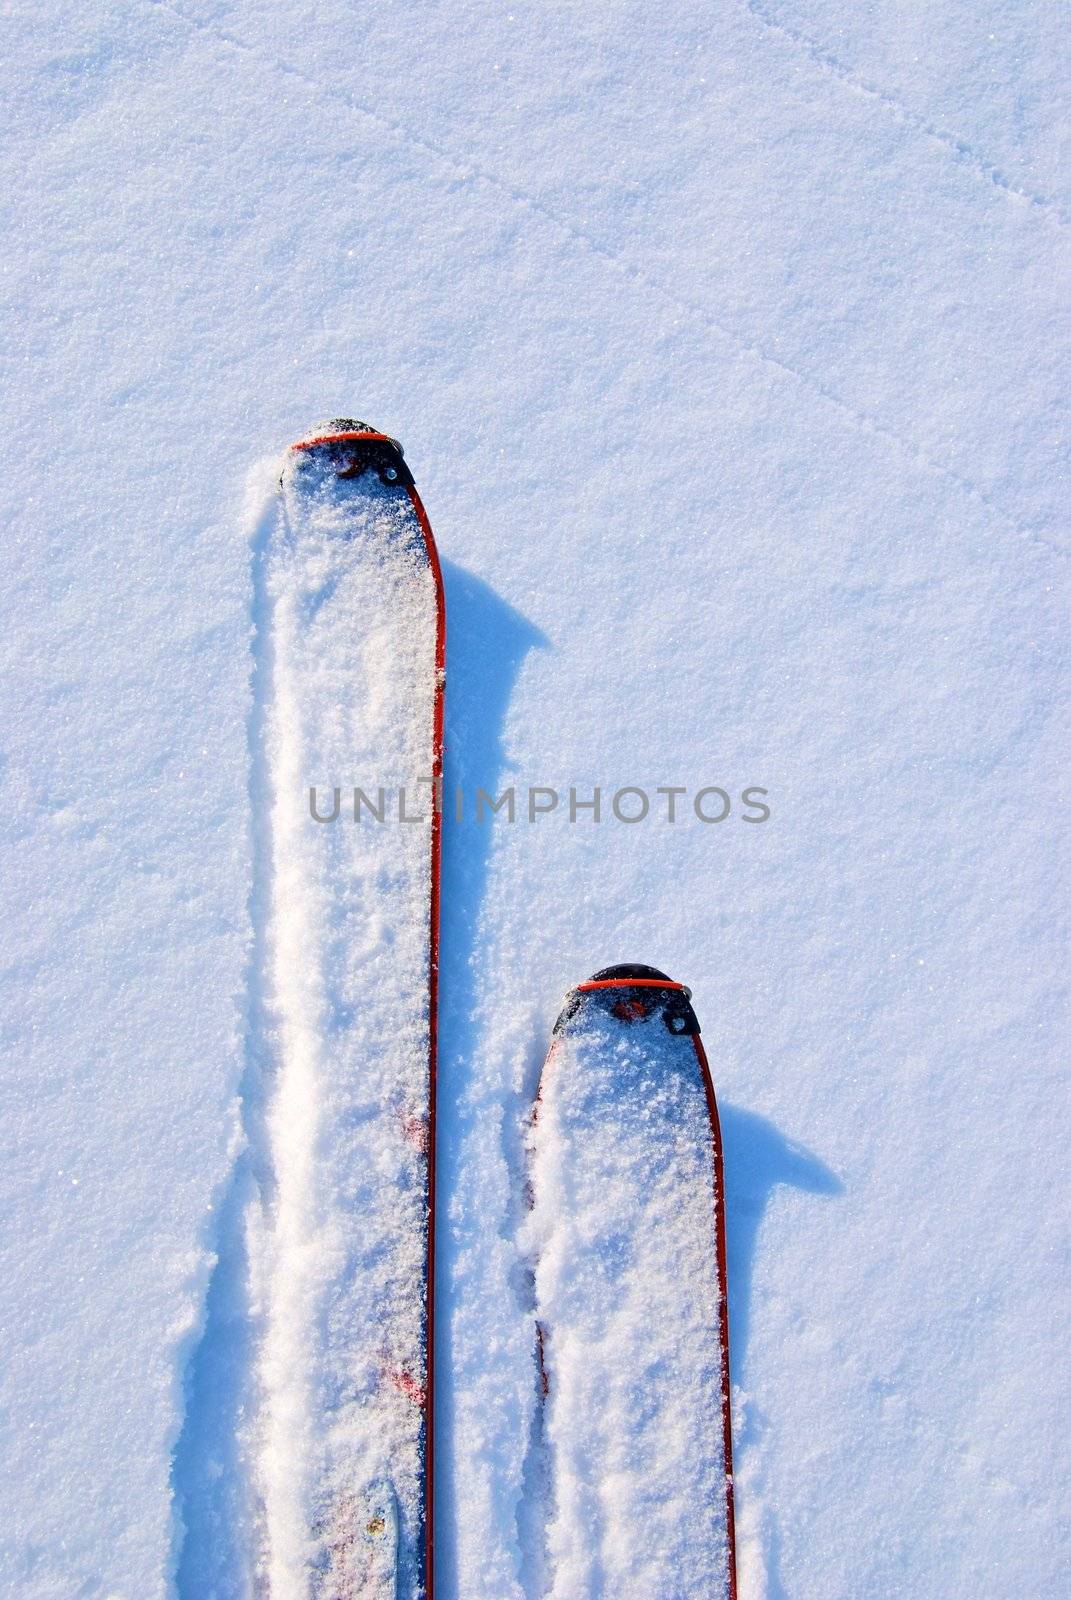 Skis in powder snow